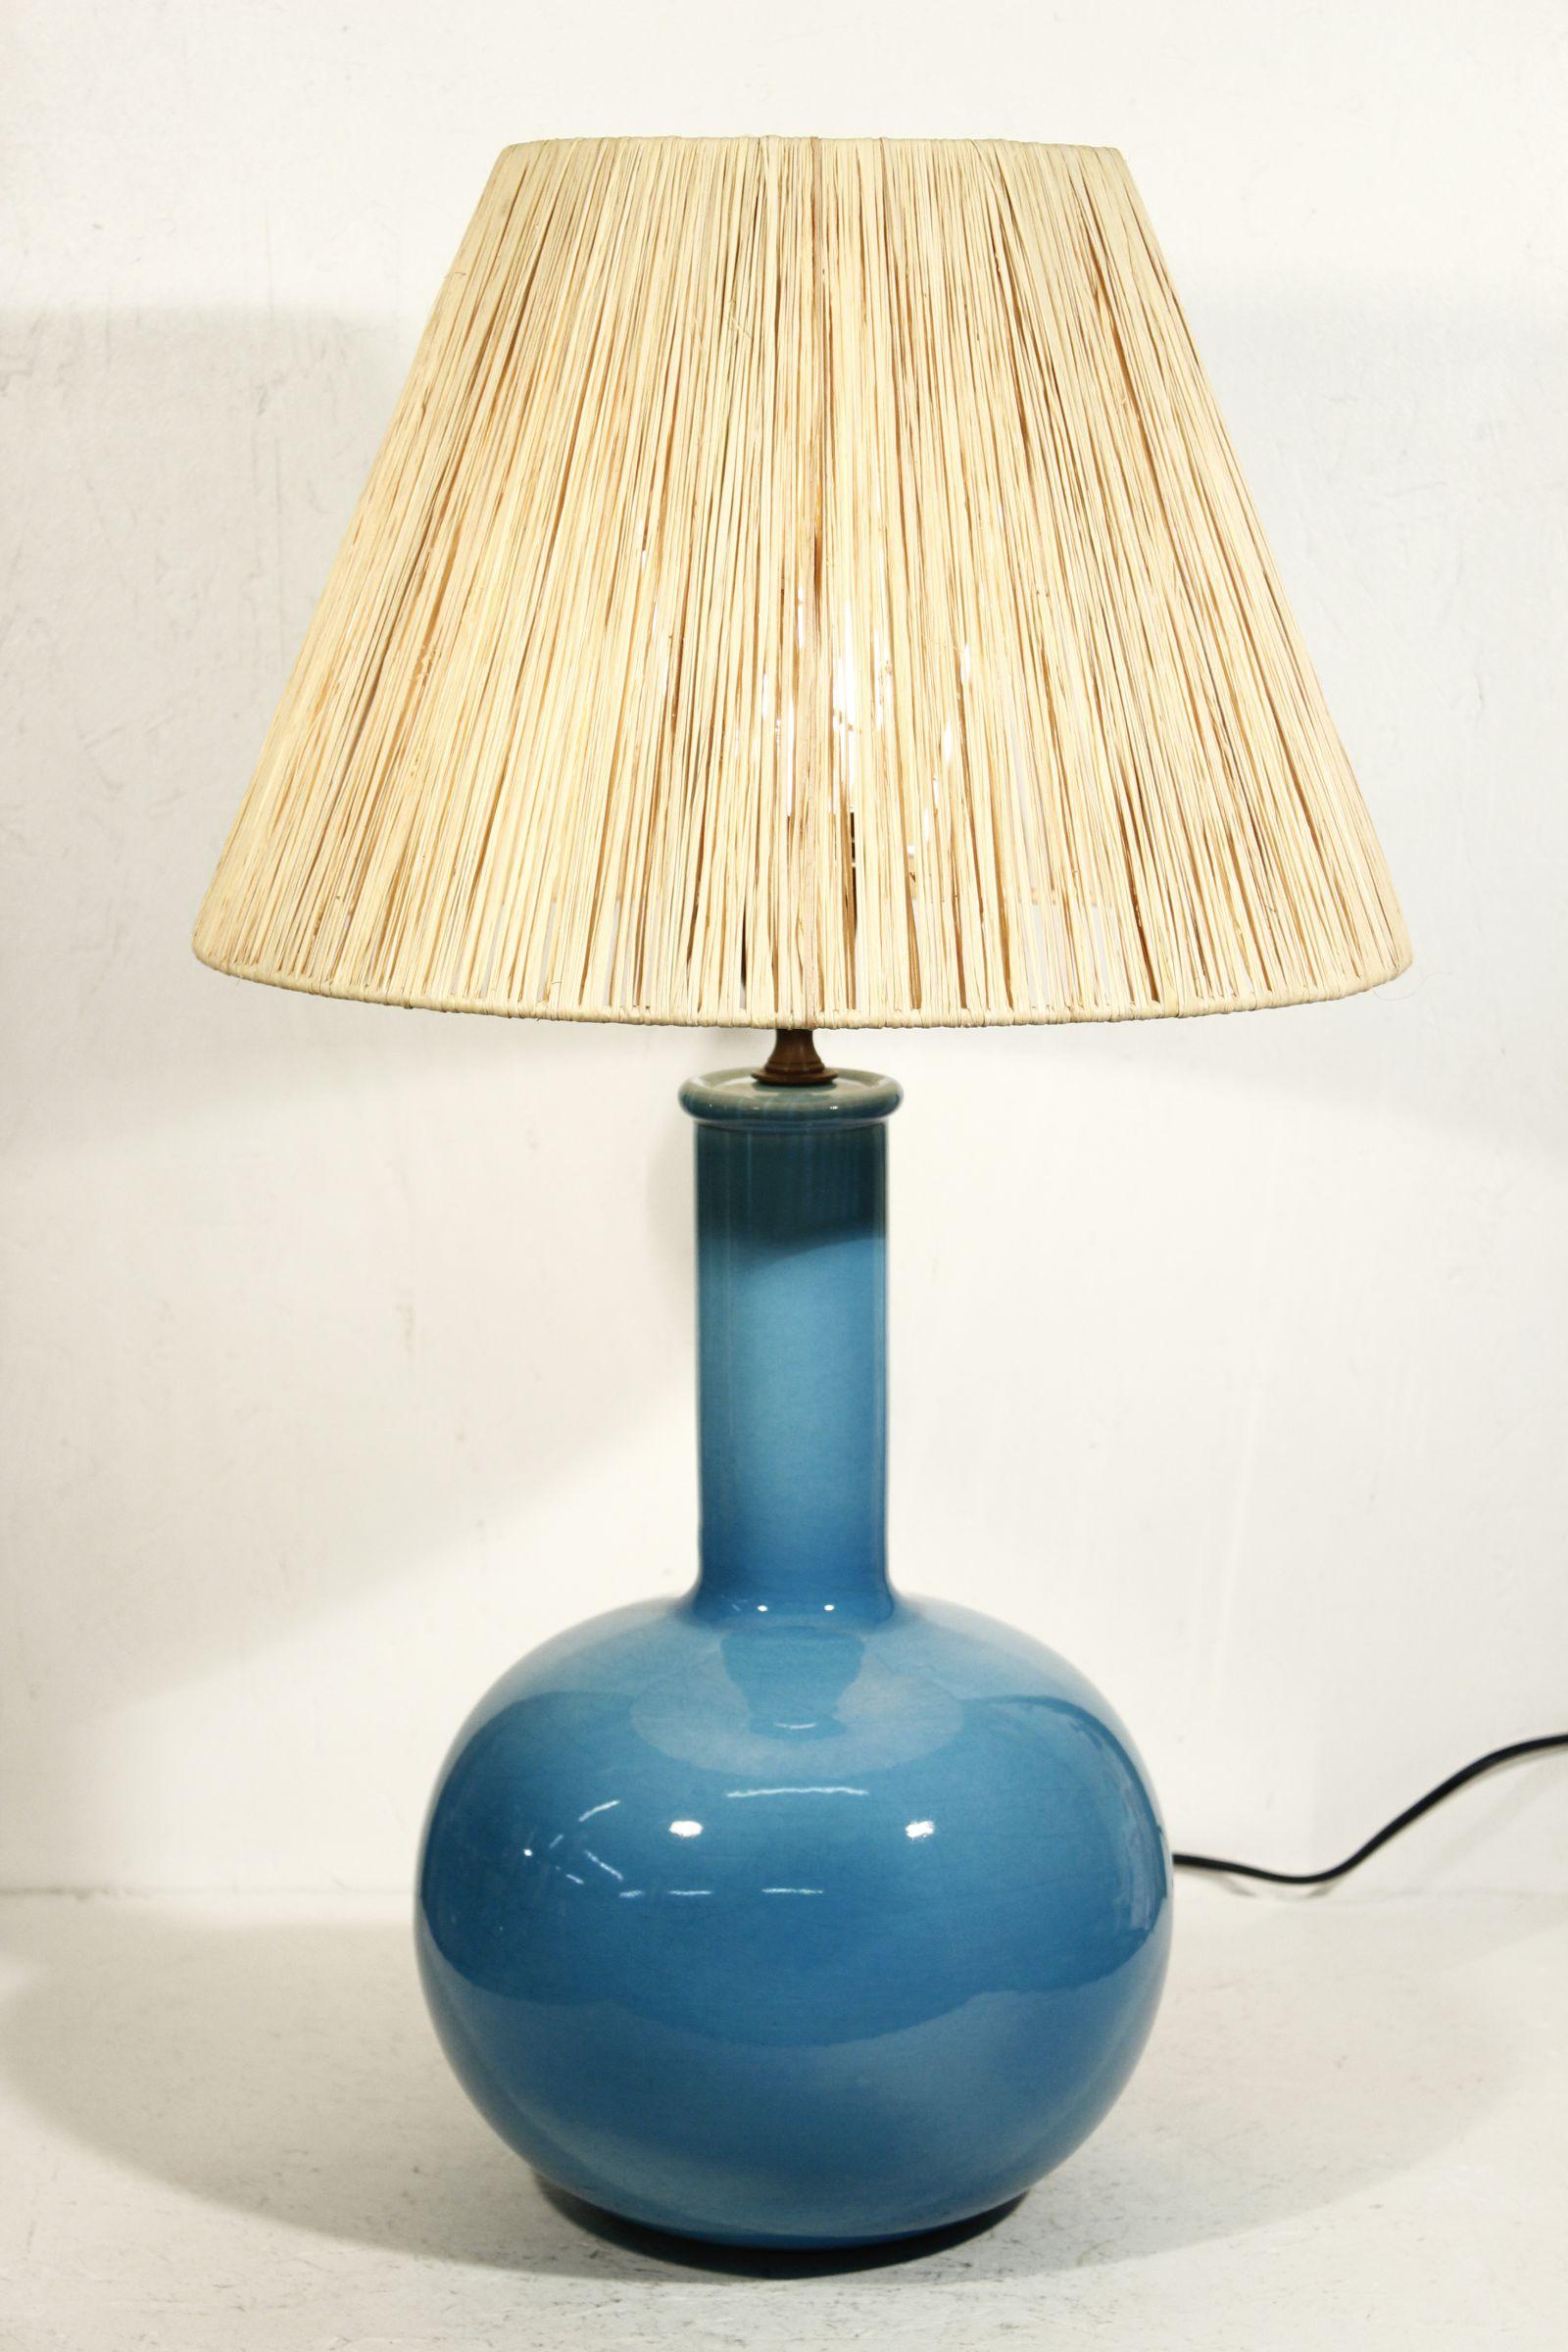 Cerulean blue crackle glaze ceramic lamp base by Alvino Bagni, Italy 1960s For Sale 2